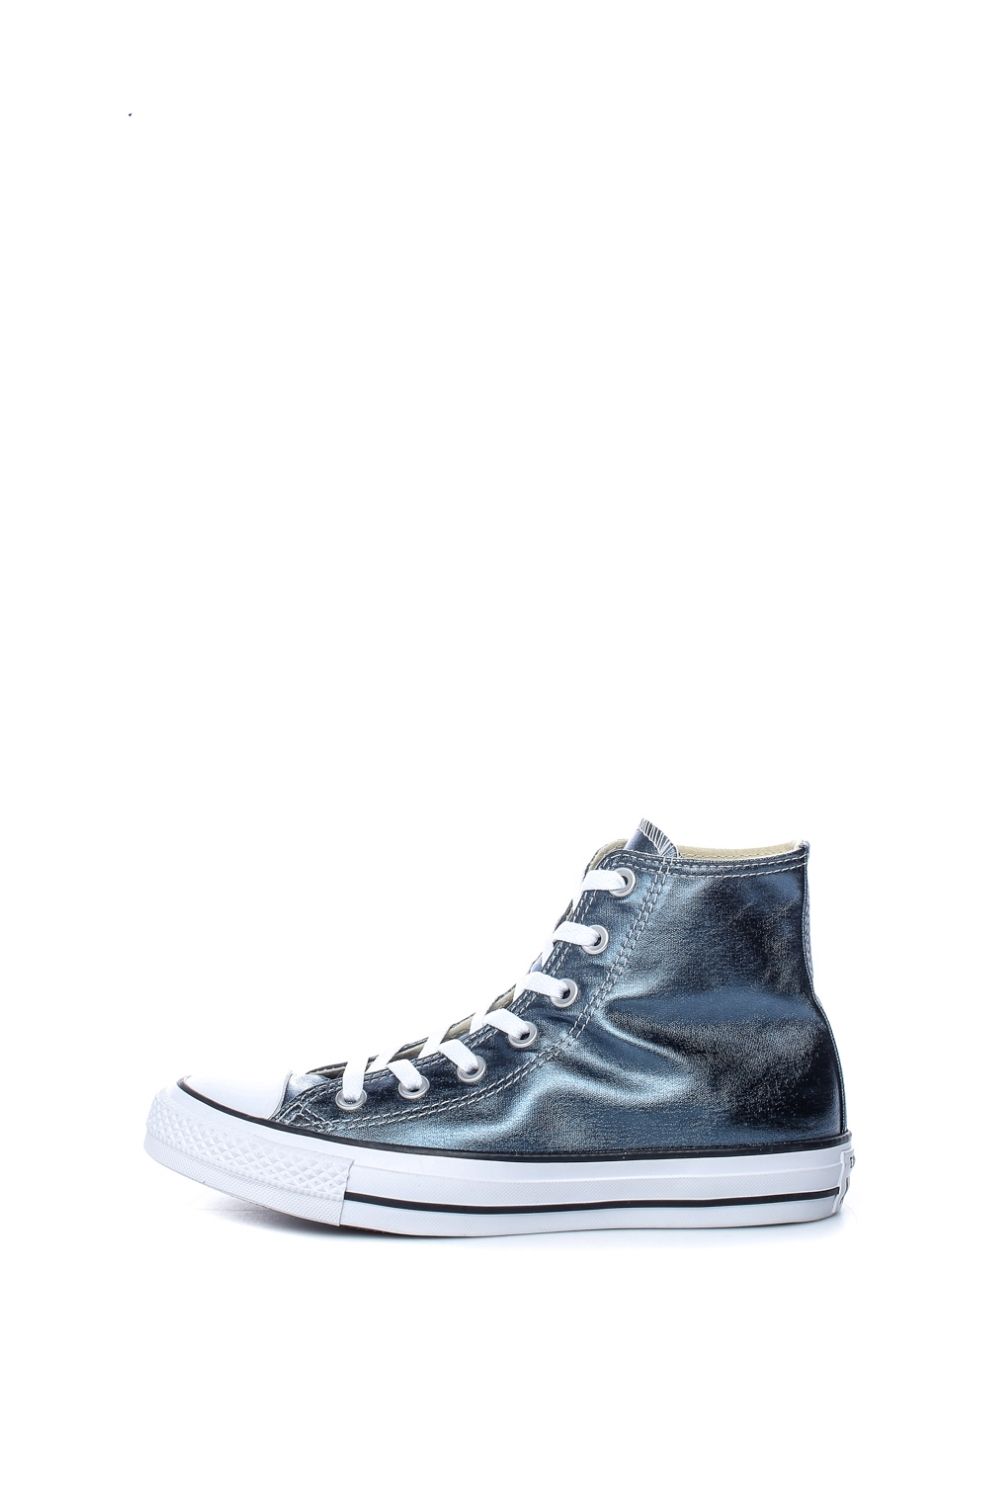 CONVERSE – Unisex ψηλά sneakers CONVERSE Chuck Taylor All Star Hi μπλε